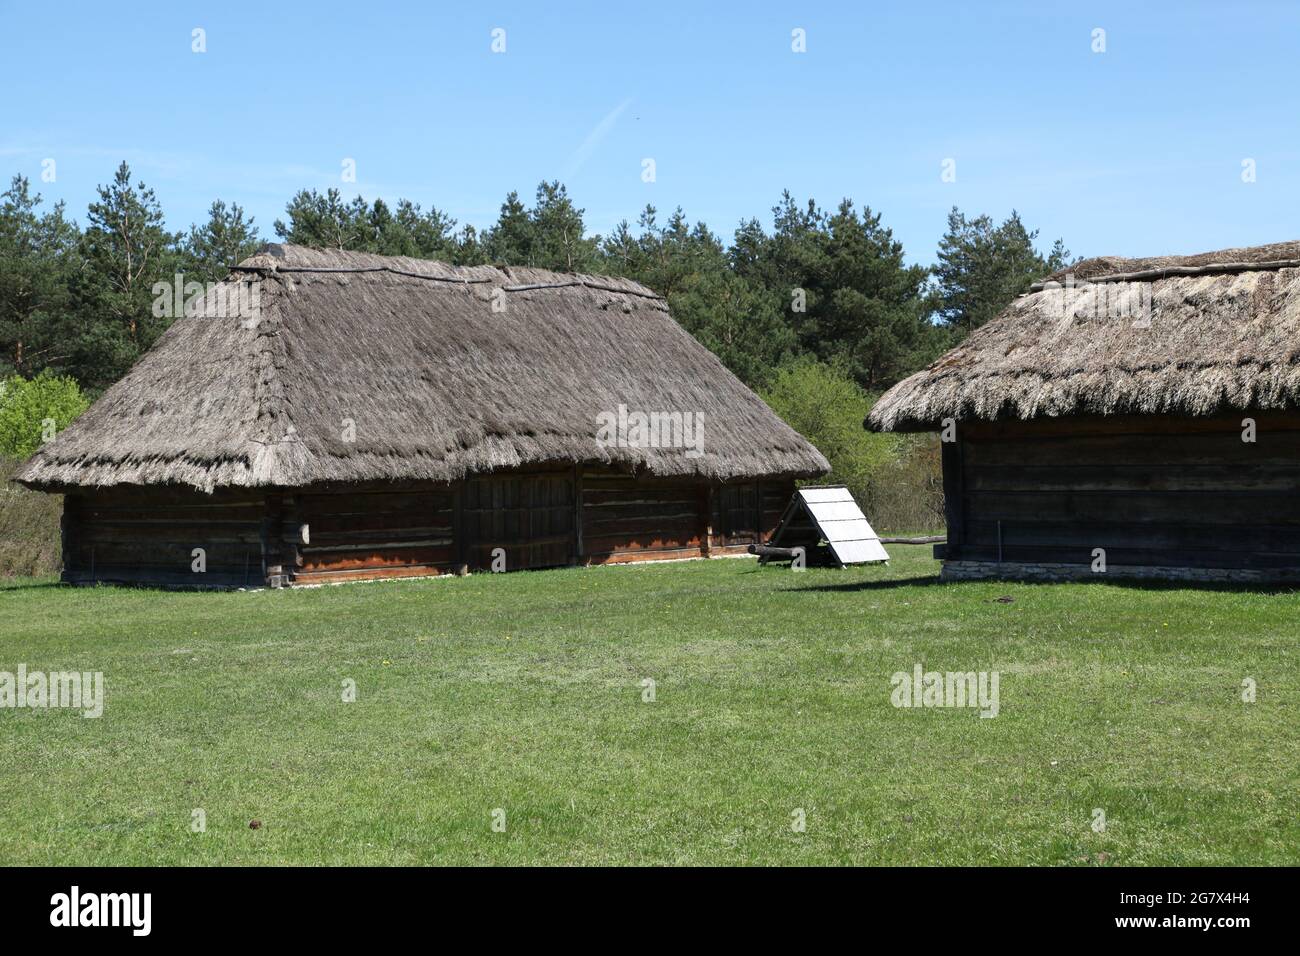 Ancienne grange de campagne, musée en plein air à Tokarnia, Tokarnia, swietokrzyskie, Pologne, architecture rurale, ancienne architecture, Banque D'Images